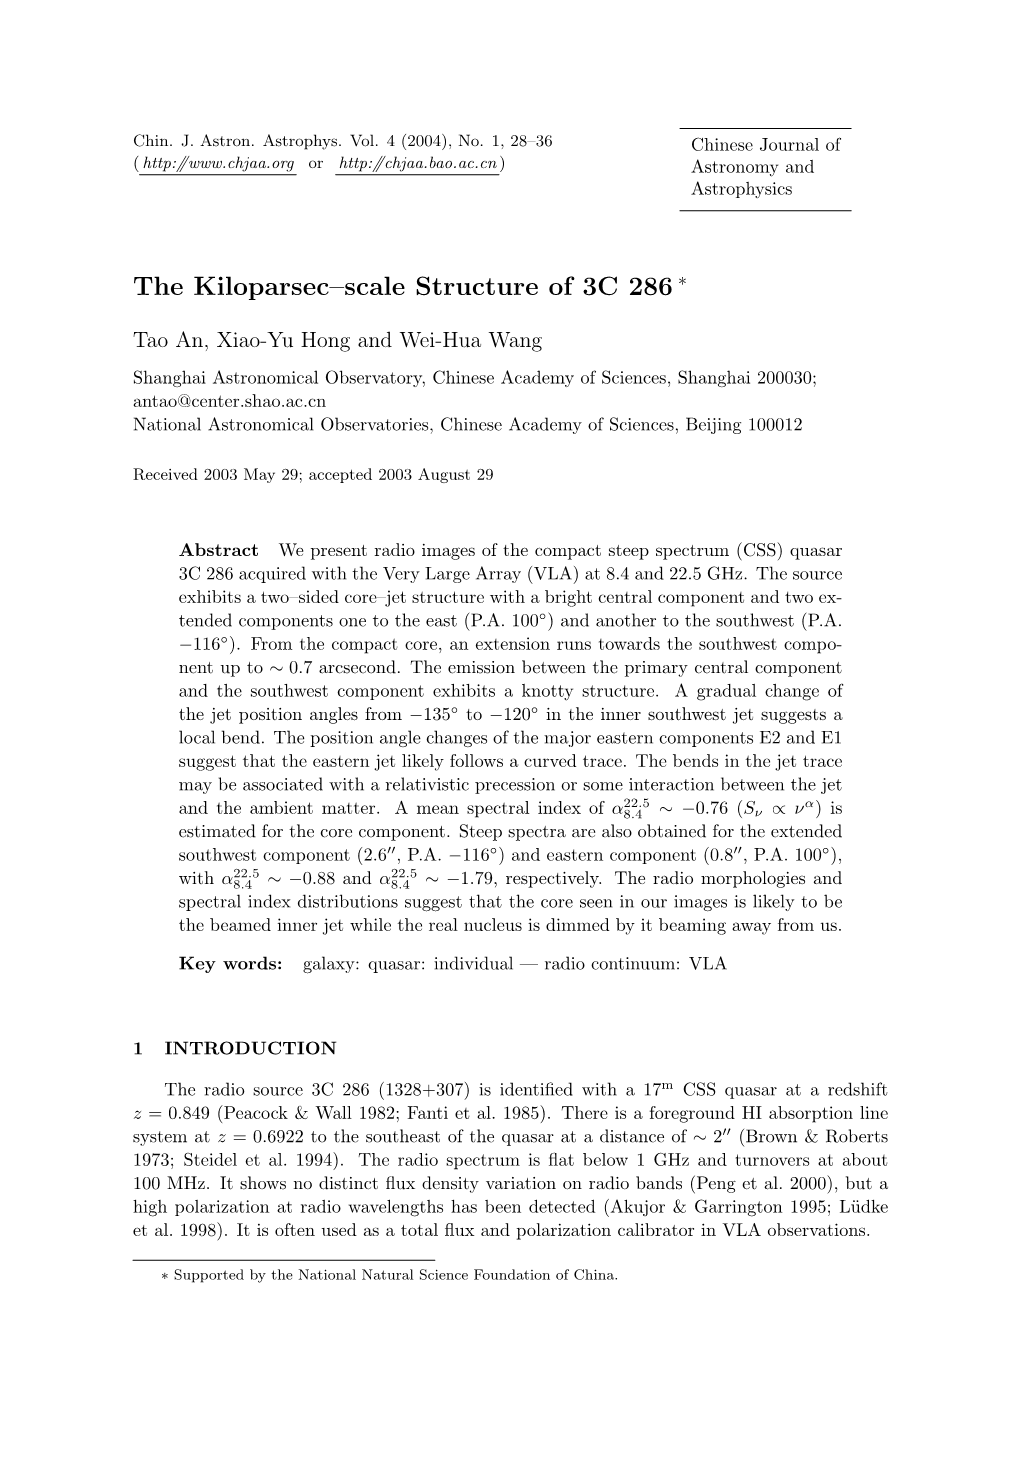 The Kiloparsec–Scale Structure of 3C 286 ∗